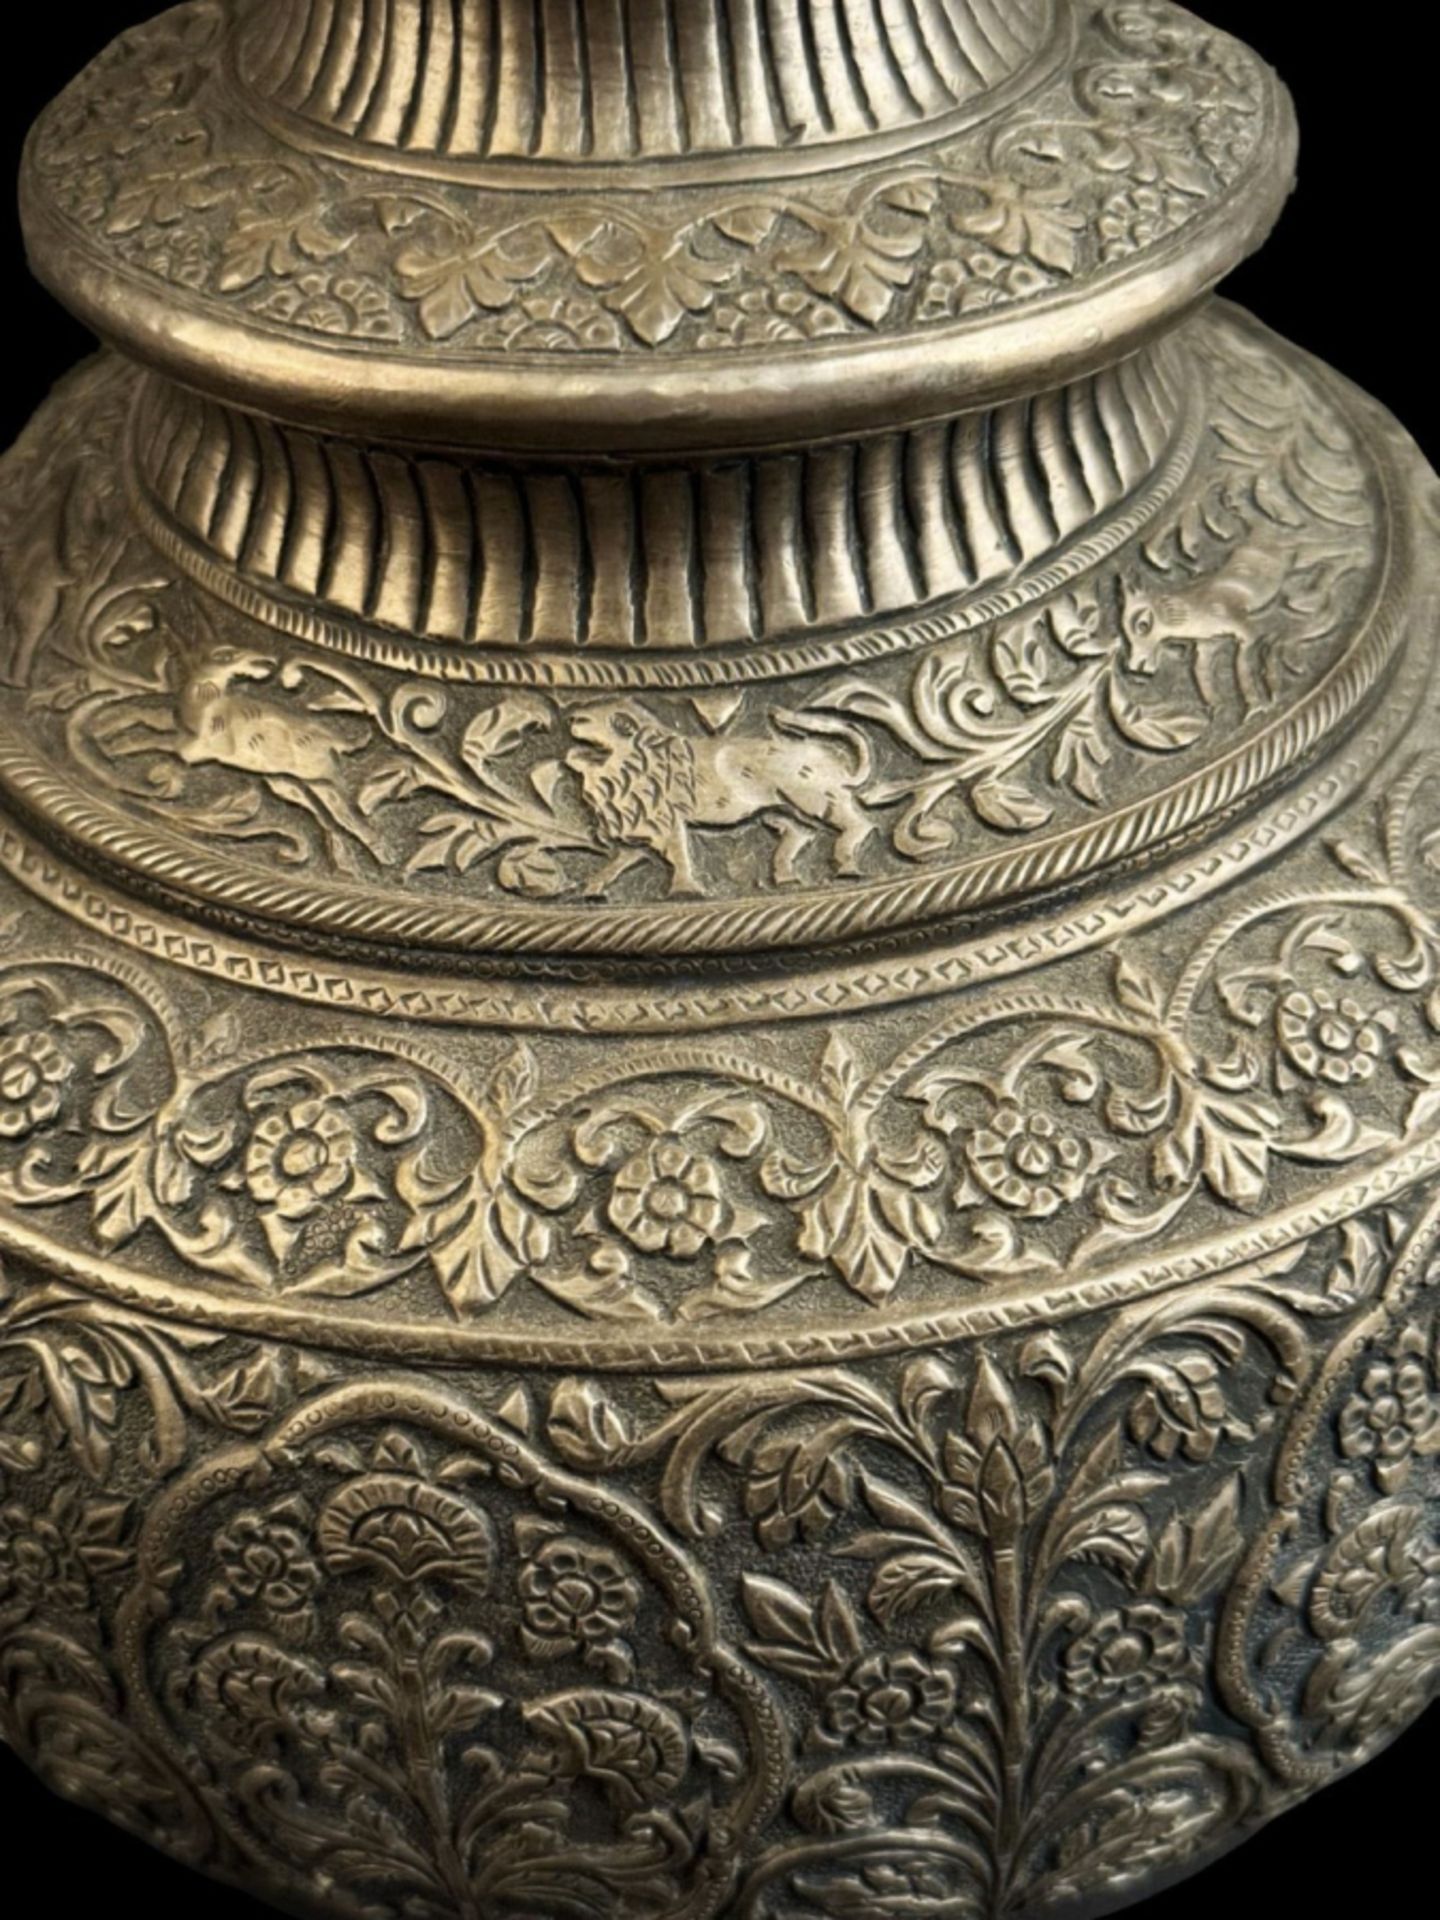 Mughal Indian silver jar - Image 5 of 5